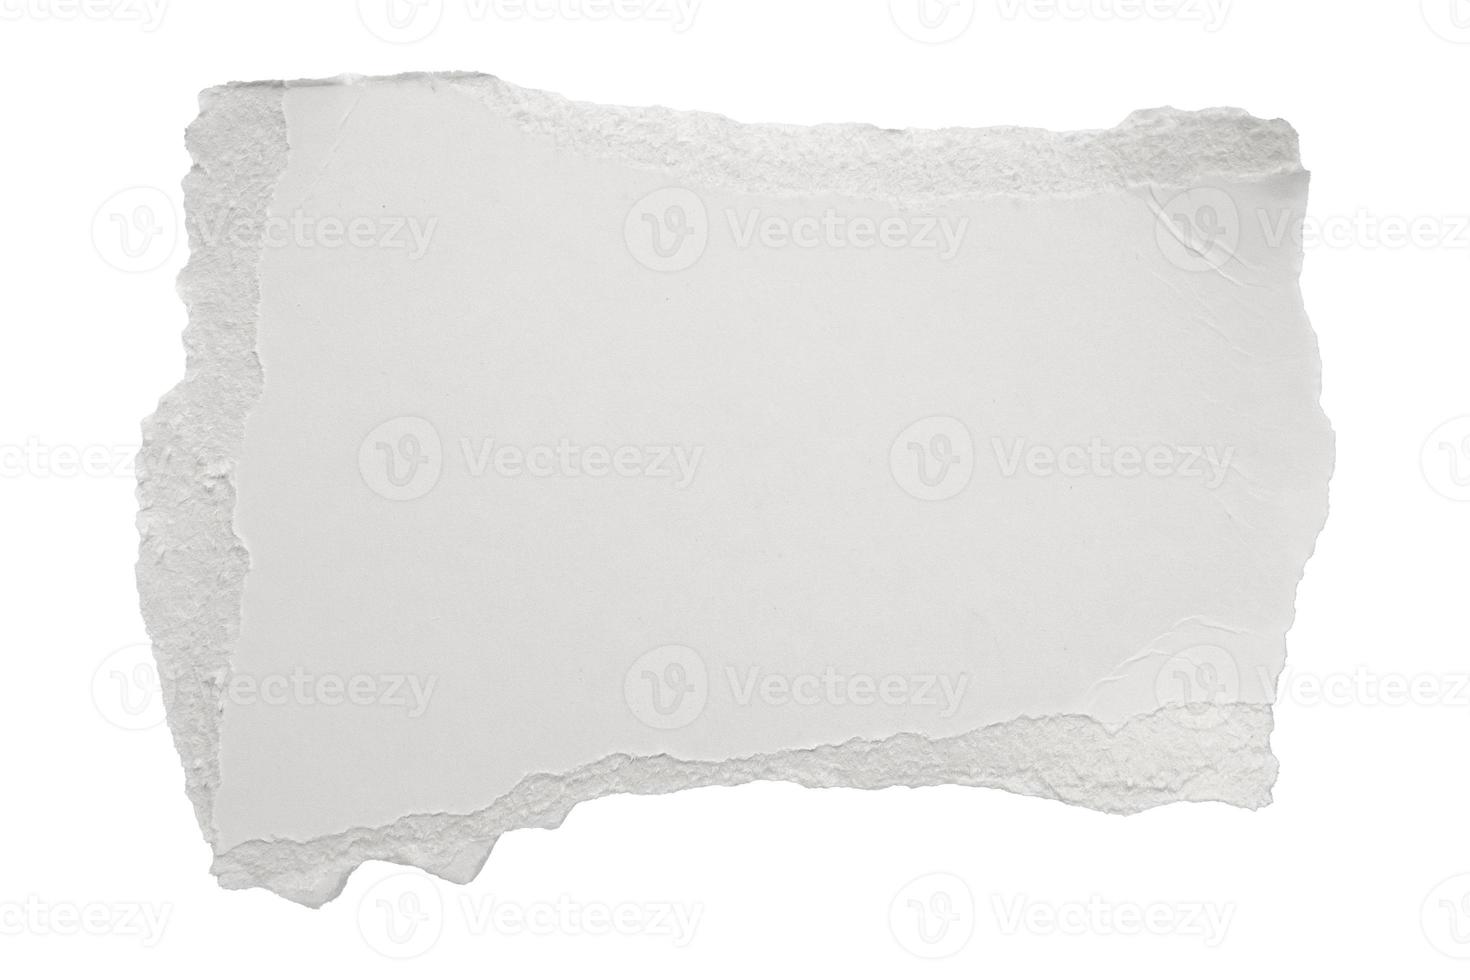 tiras de bordes rasgados de papel rasgado blanco aislado sobre fondo blanco foto